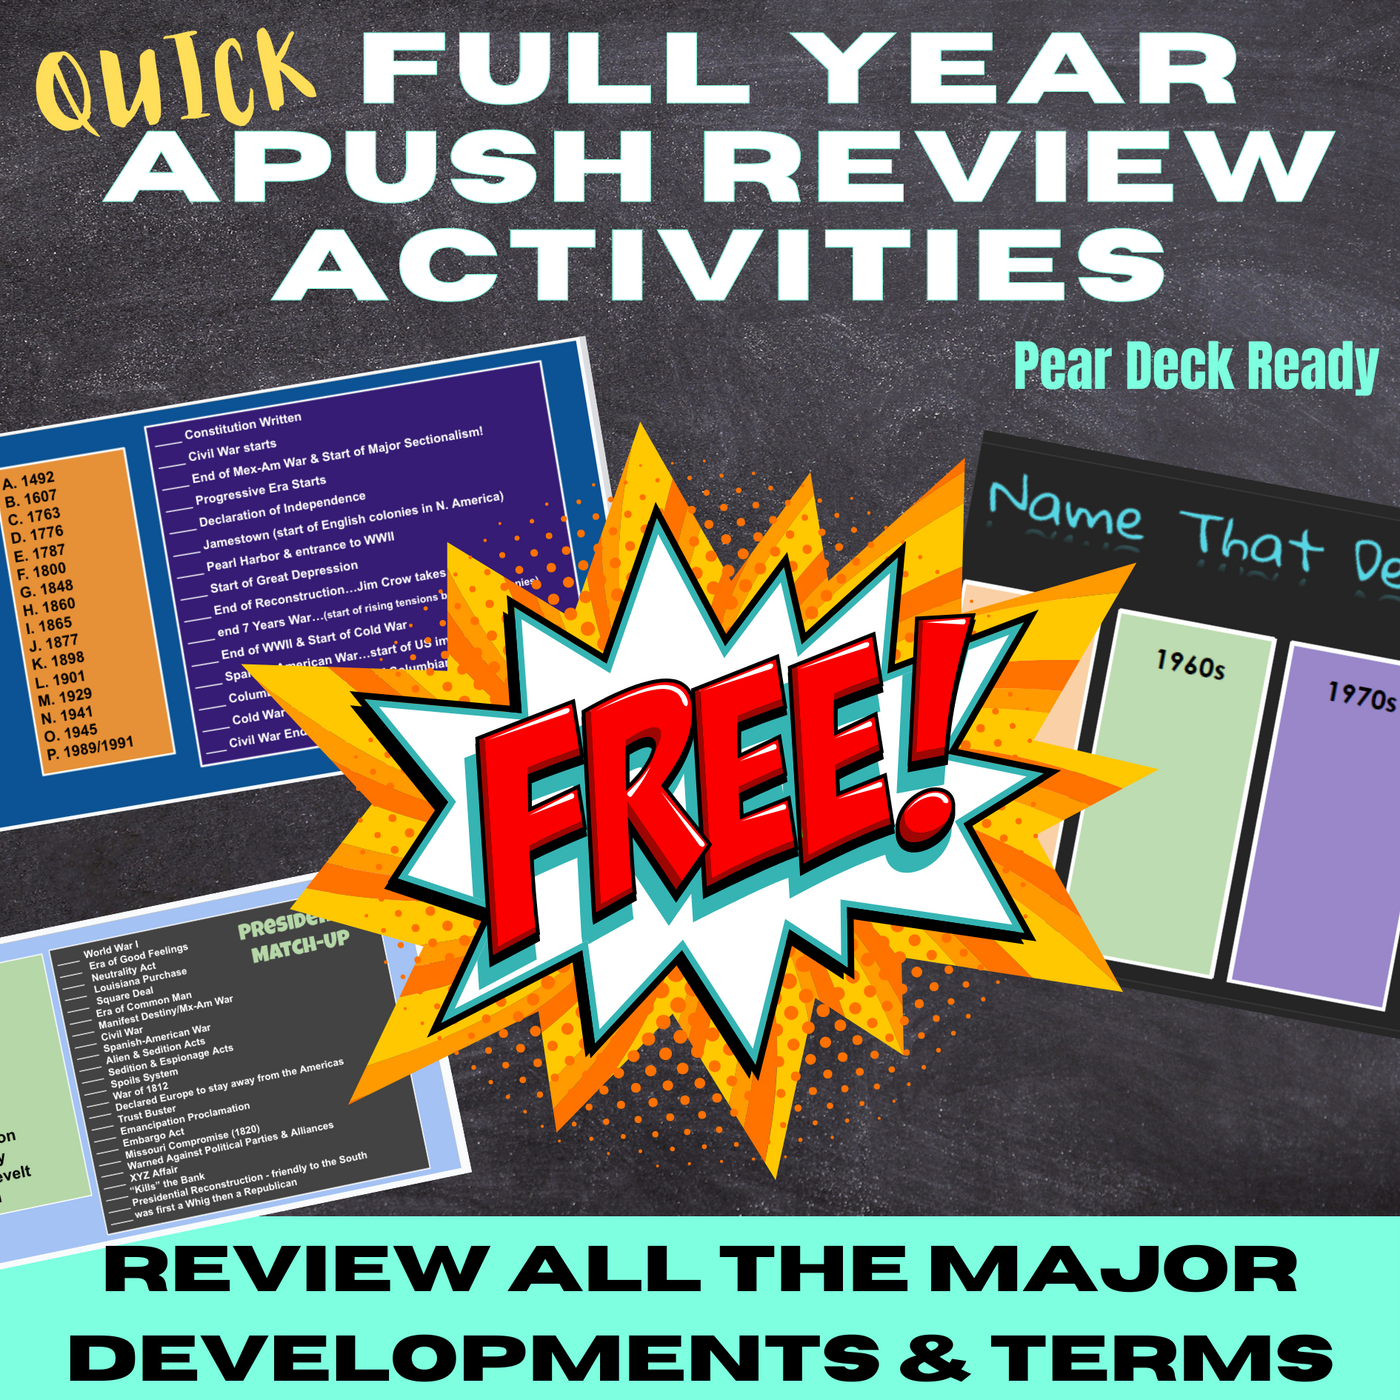 Full Year APUSH Review Activities